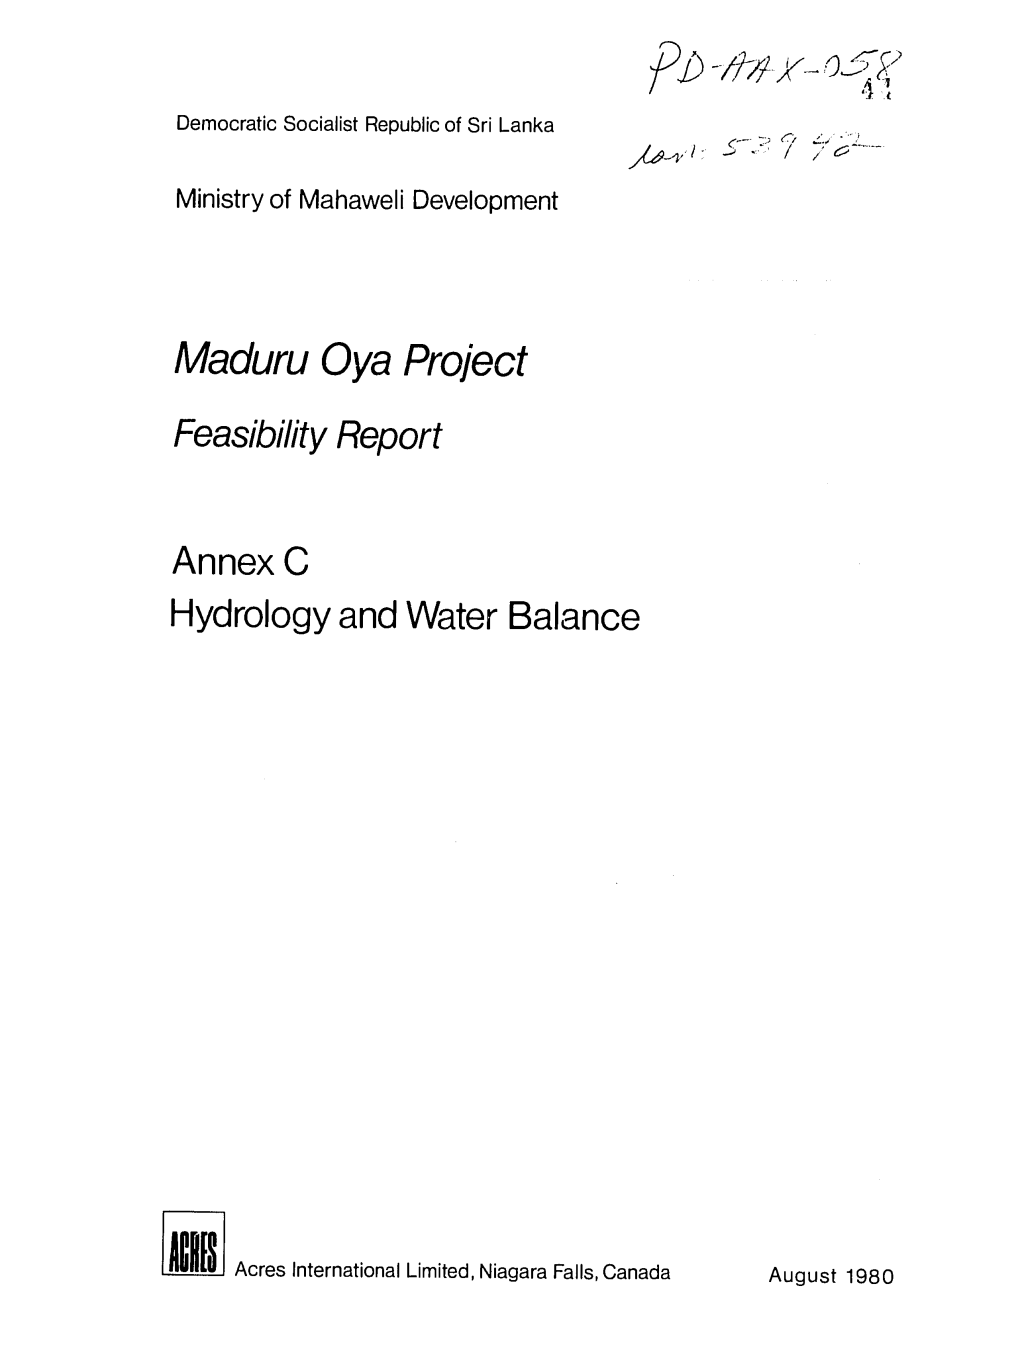 Maduru Oya Project Feasibilityreport